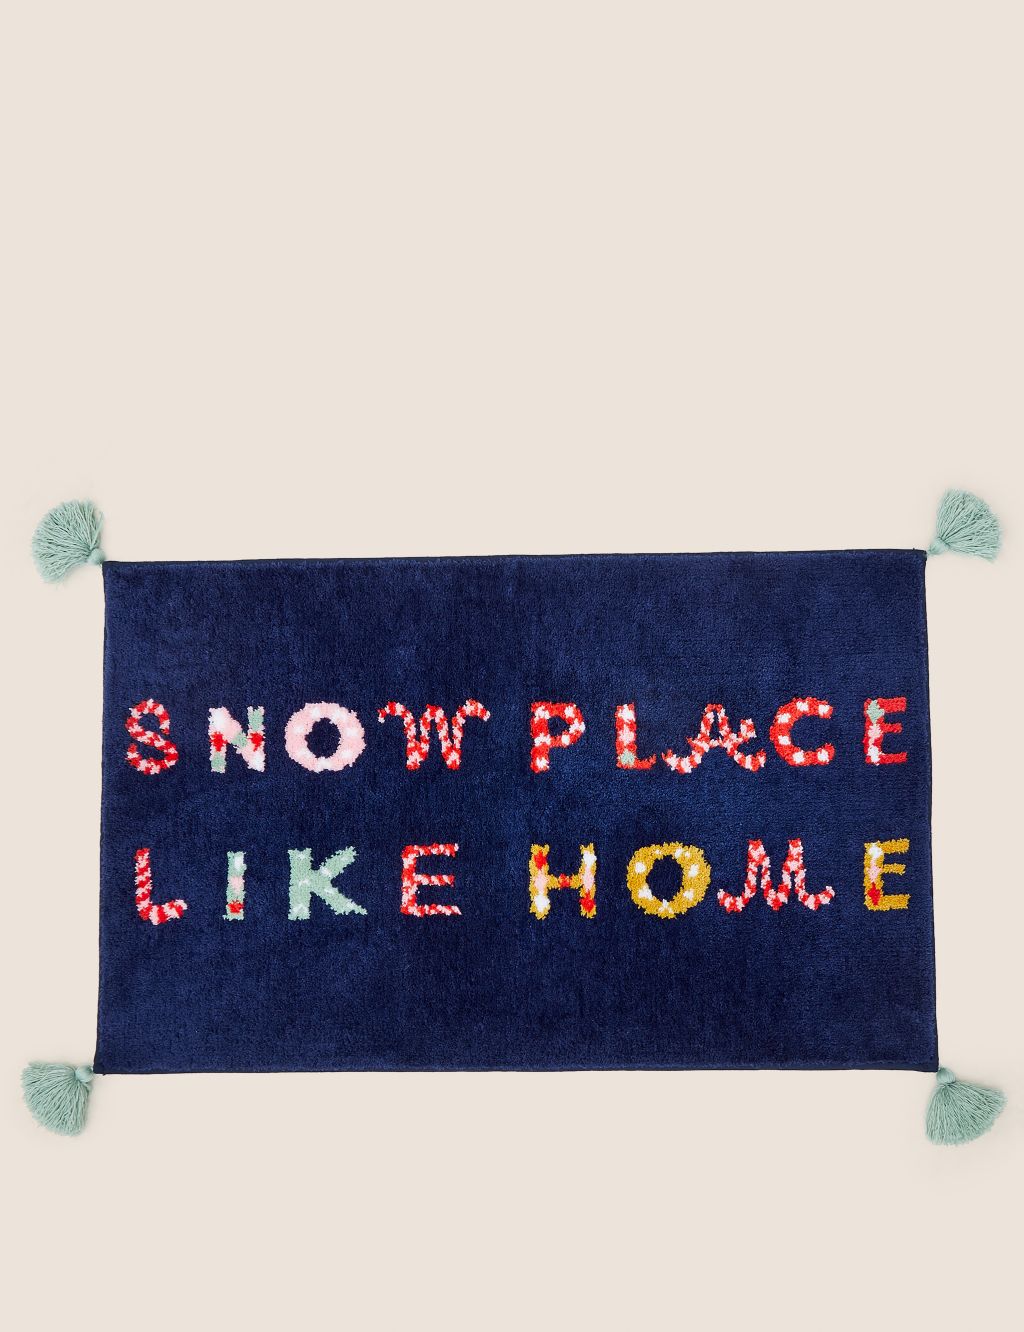 Snow Place Like Home Slogan Bath Mat image 1